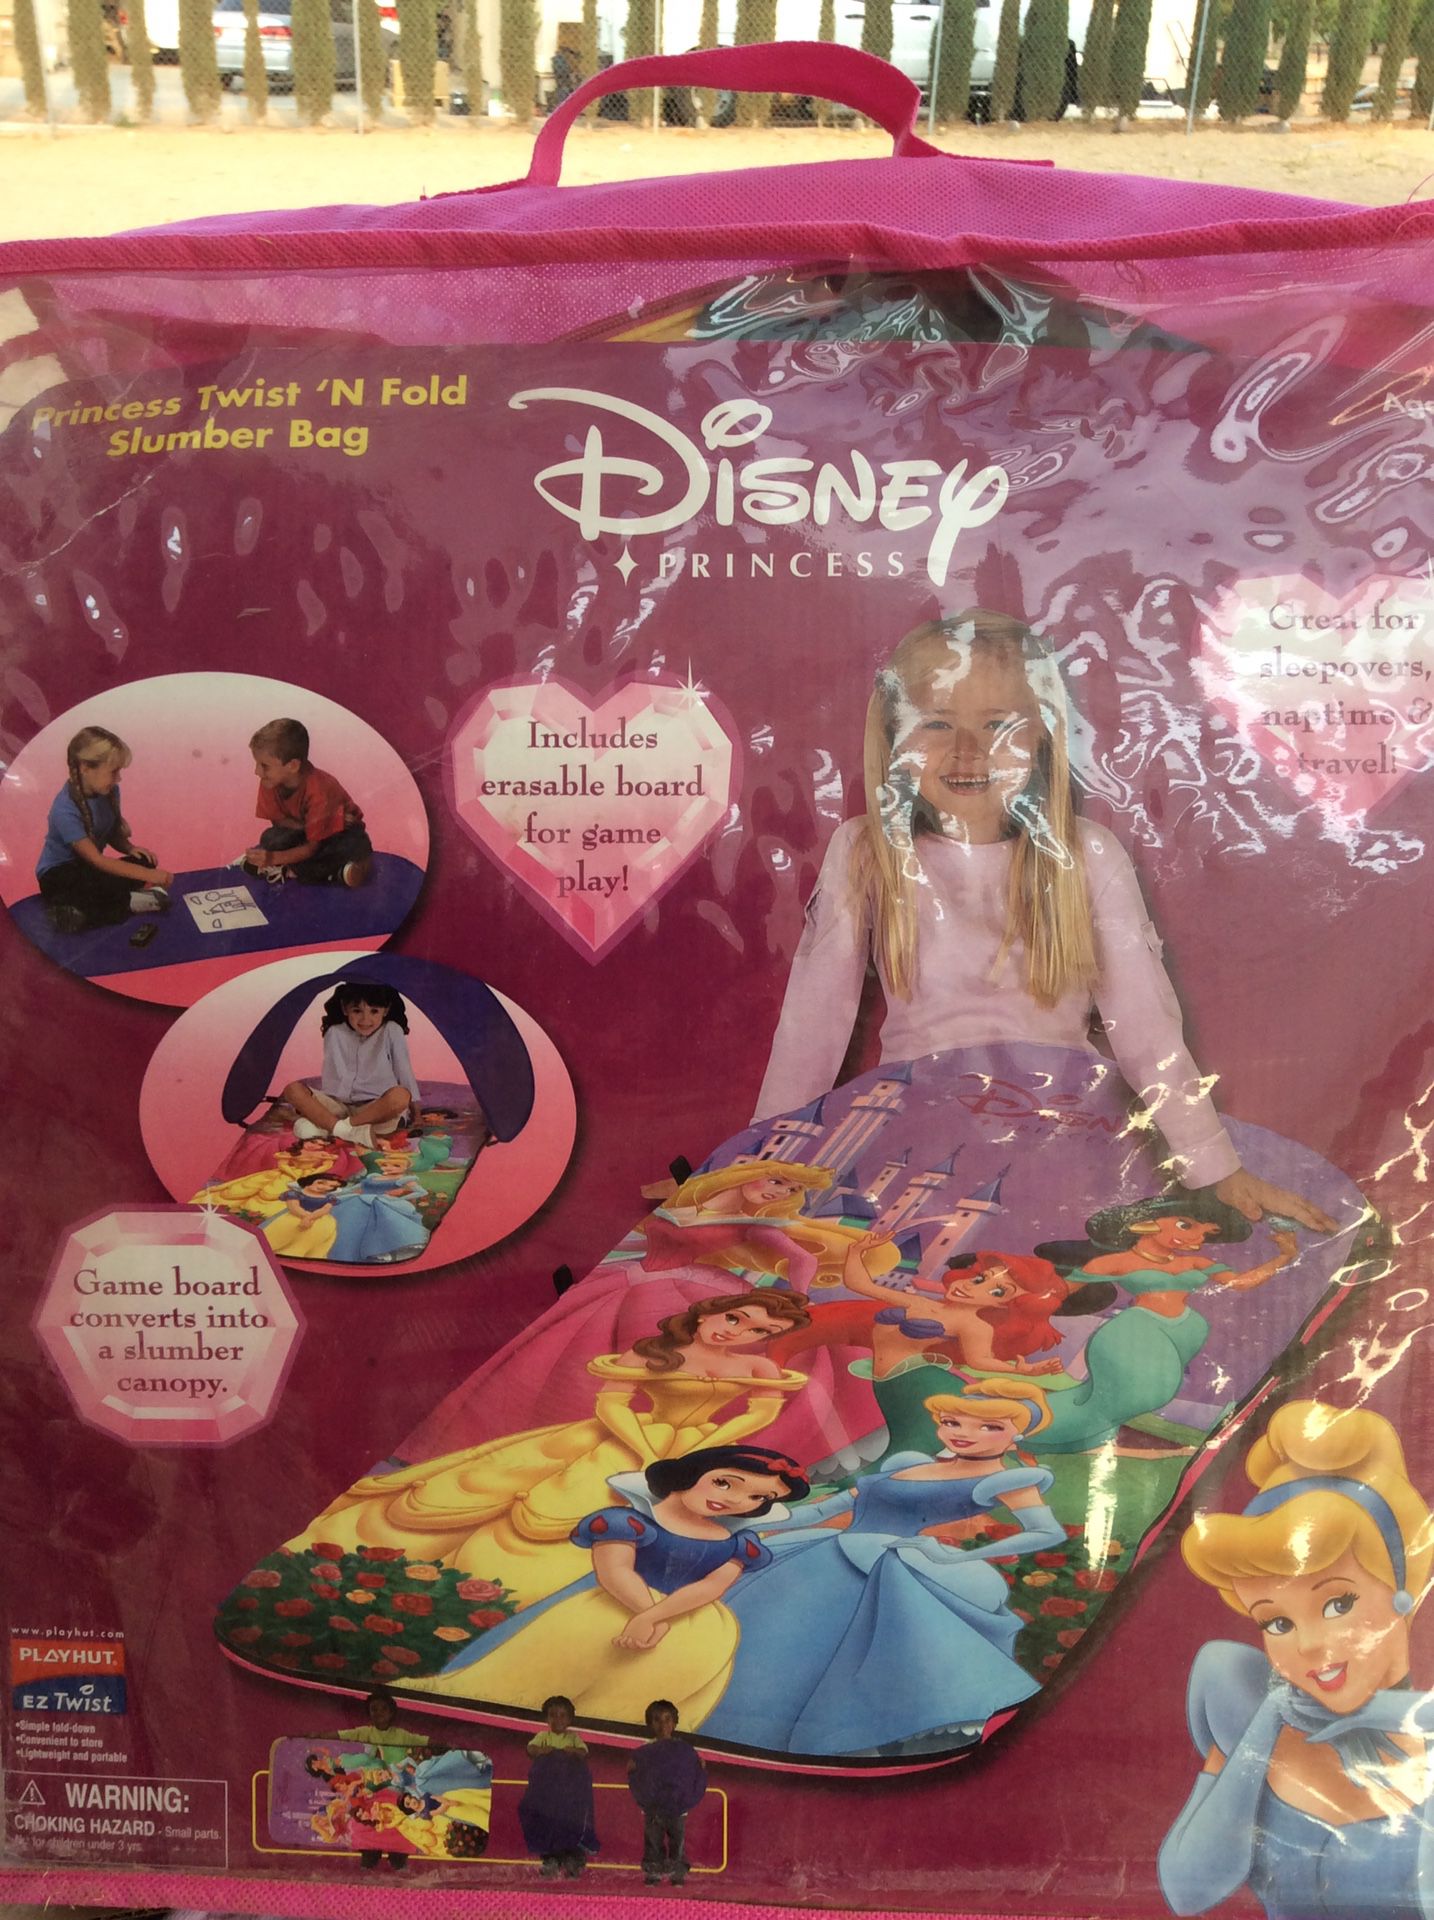 1 Disney Princess twist and fold slumber bag